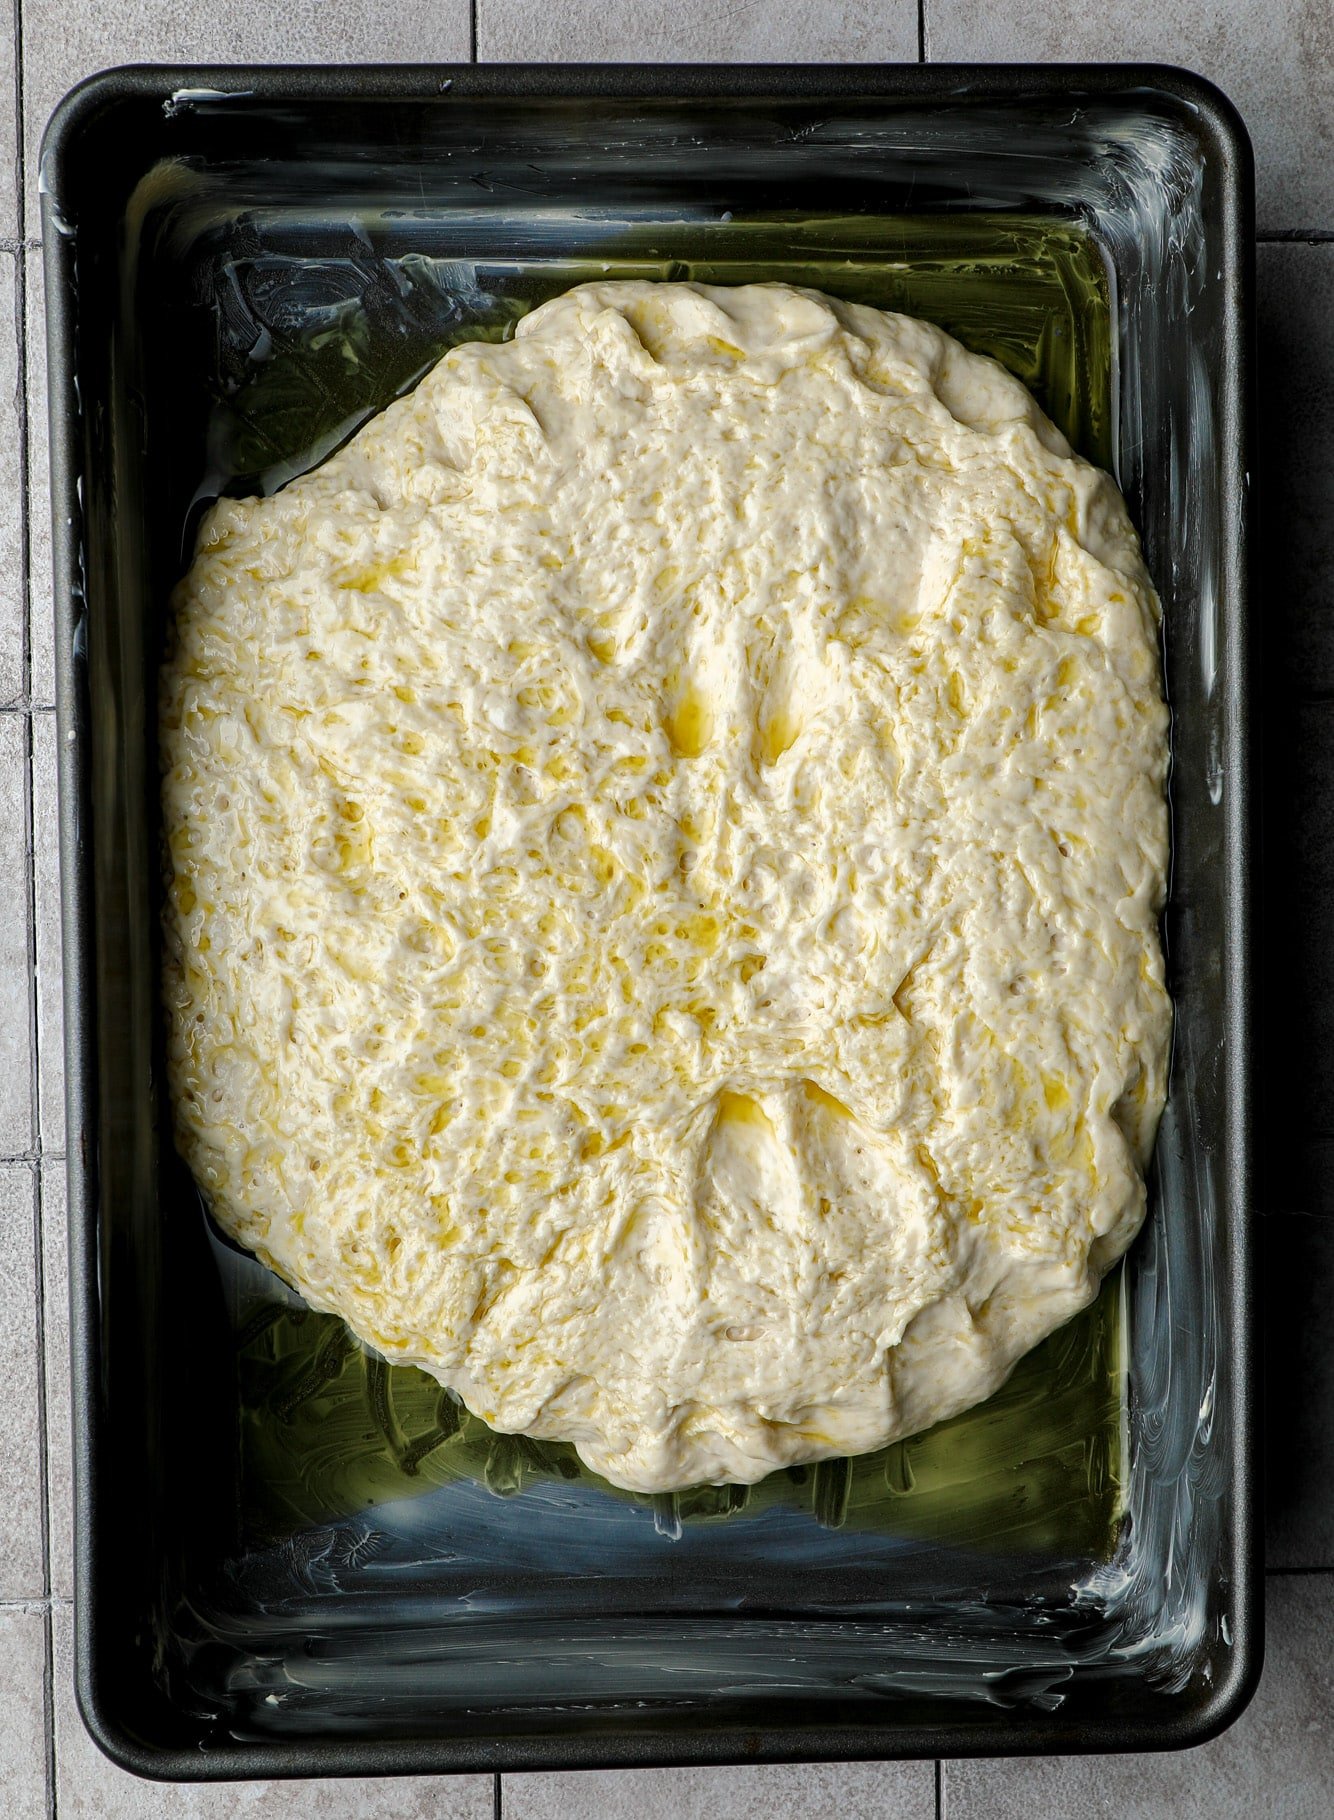 oiled focaccia dough in a large black baking pan.